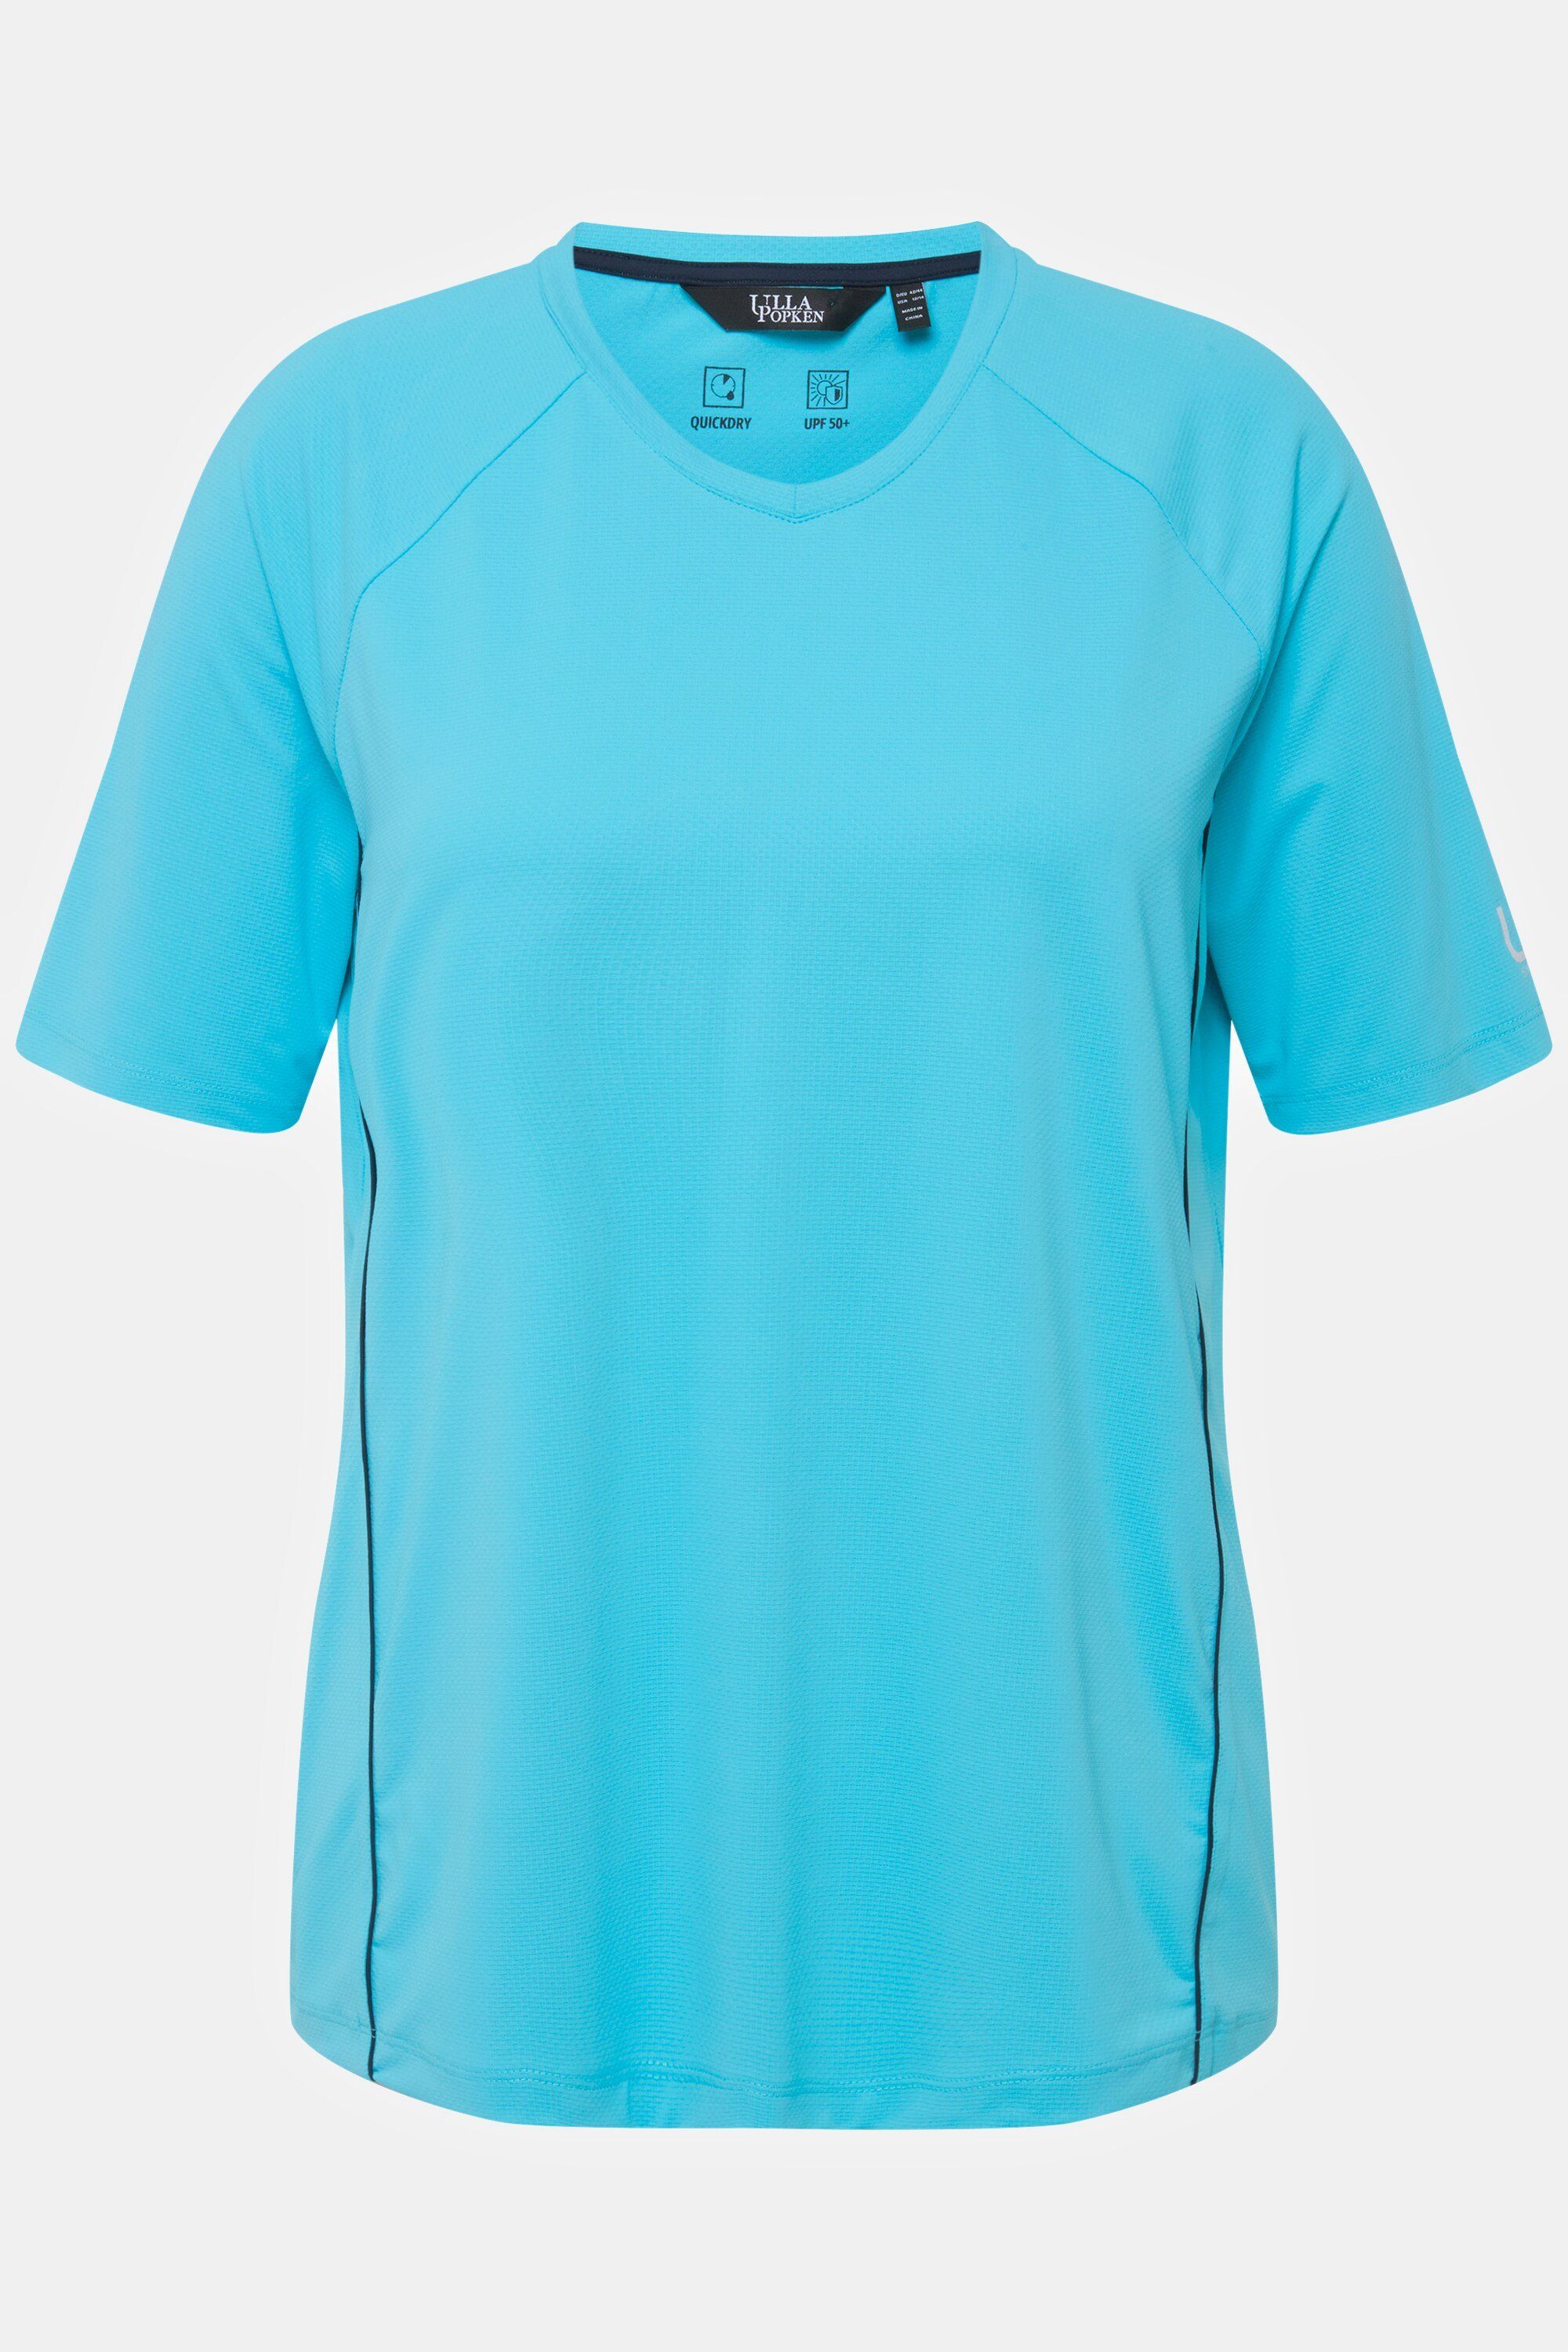 Halbarm türkis Popken V-Ausschnitt T-Shirt Ulla 50+ UV-Schutz Rundhalsshirt helles